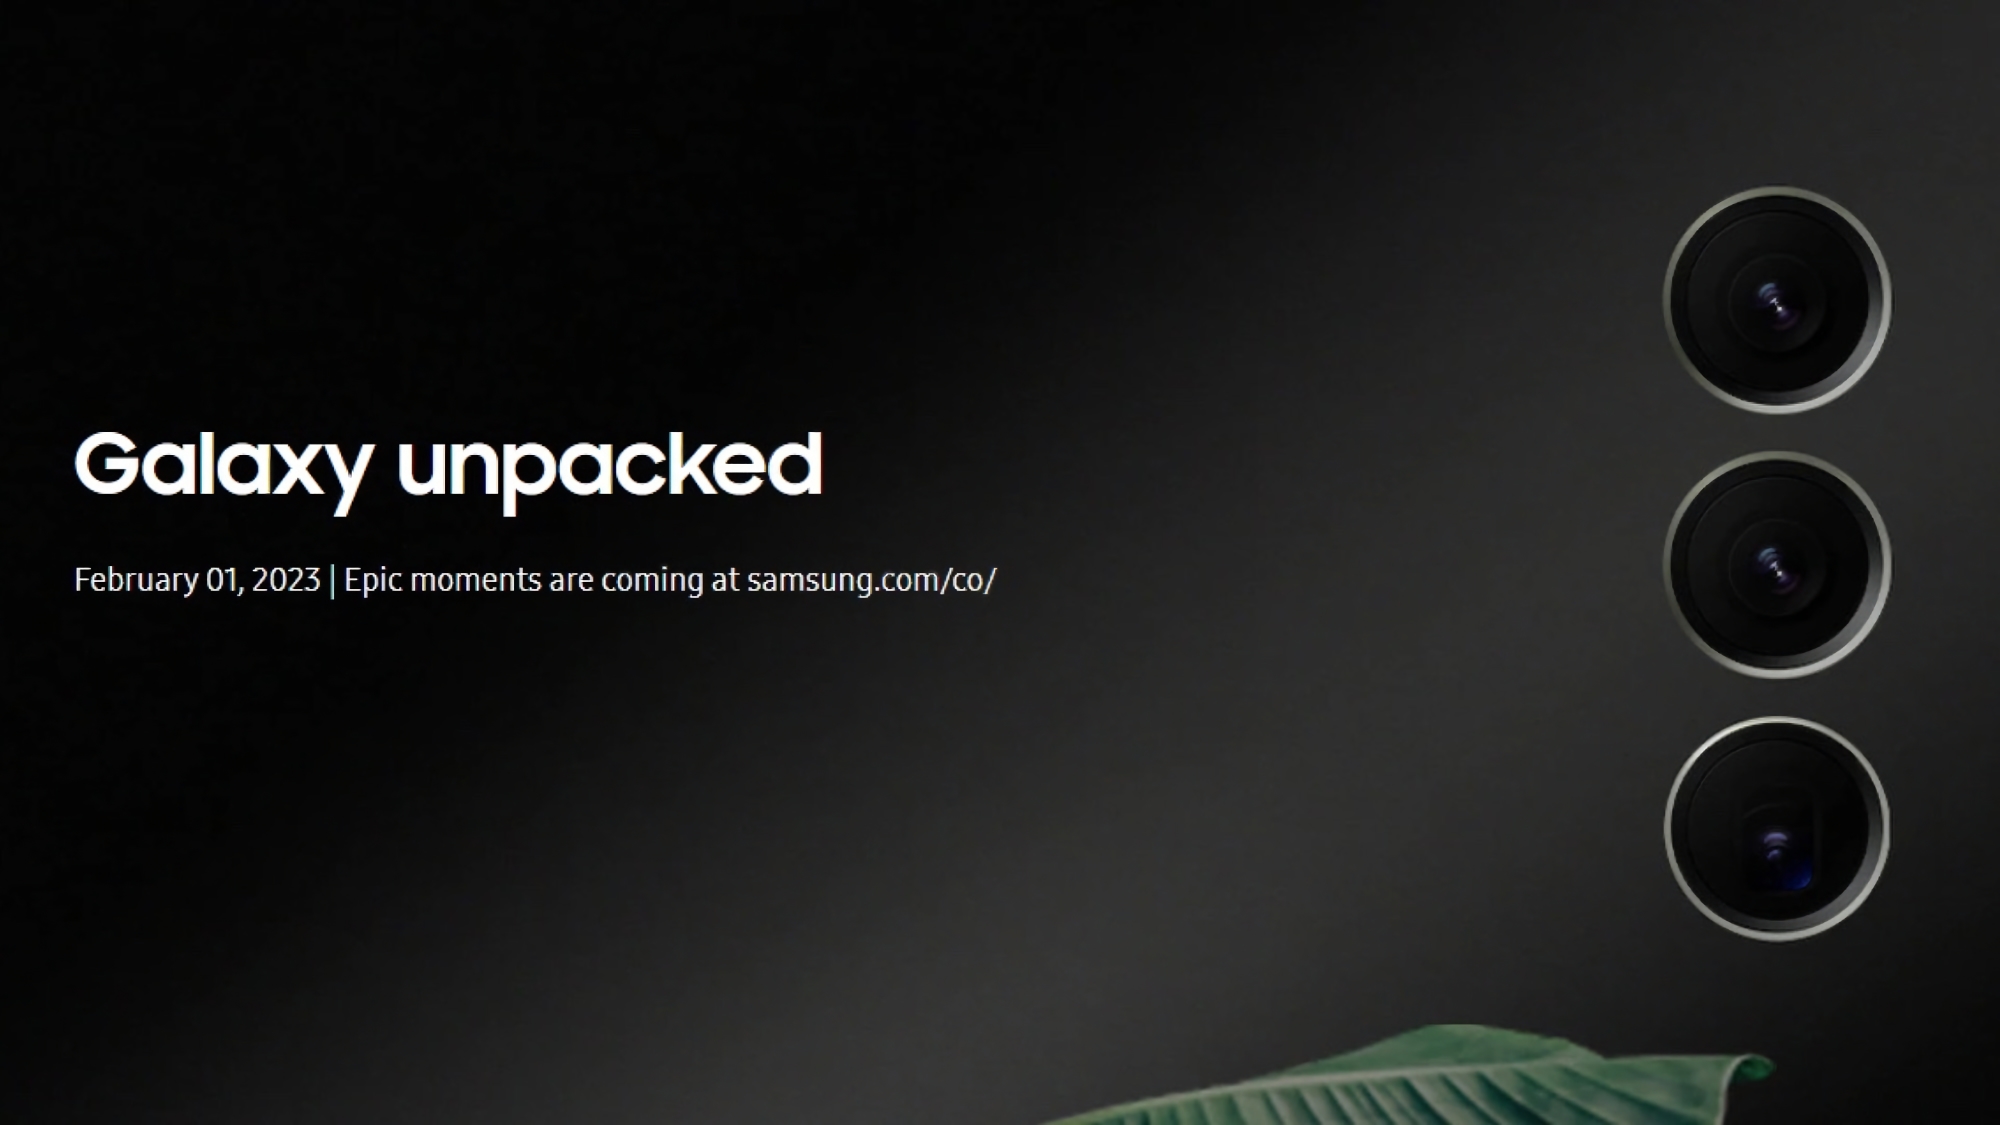 Samsung підтвердила, що флагмани Galaxy S23, Galaxy S23+ і Galaxy S23 Ultra представлять на презентації Galaxy Unpacked 1 лютого